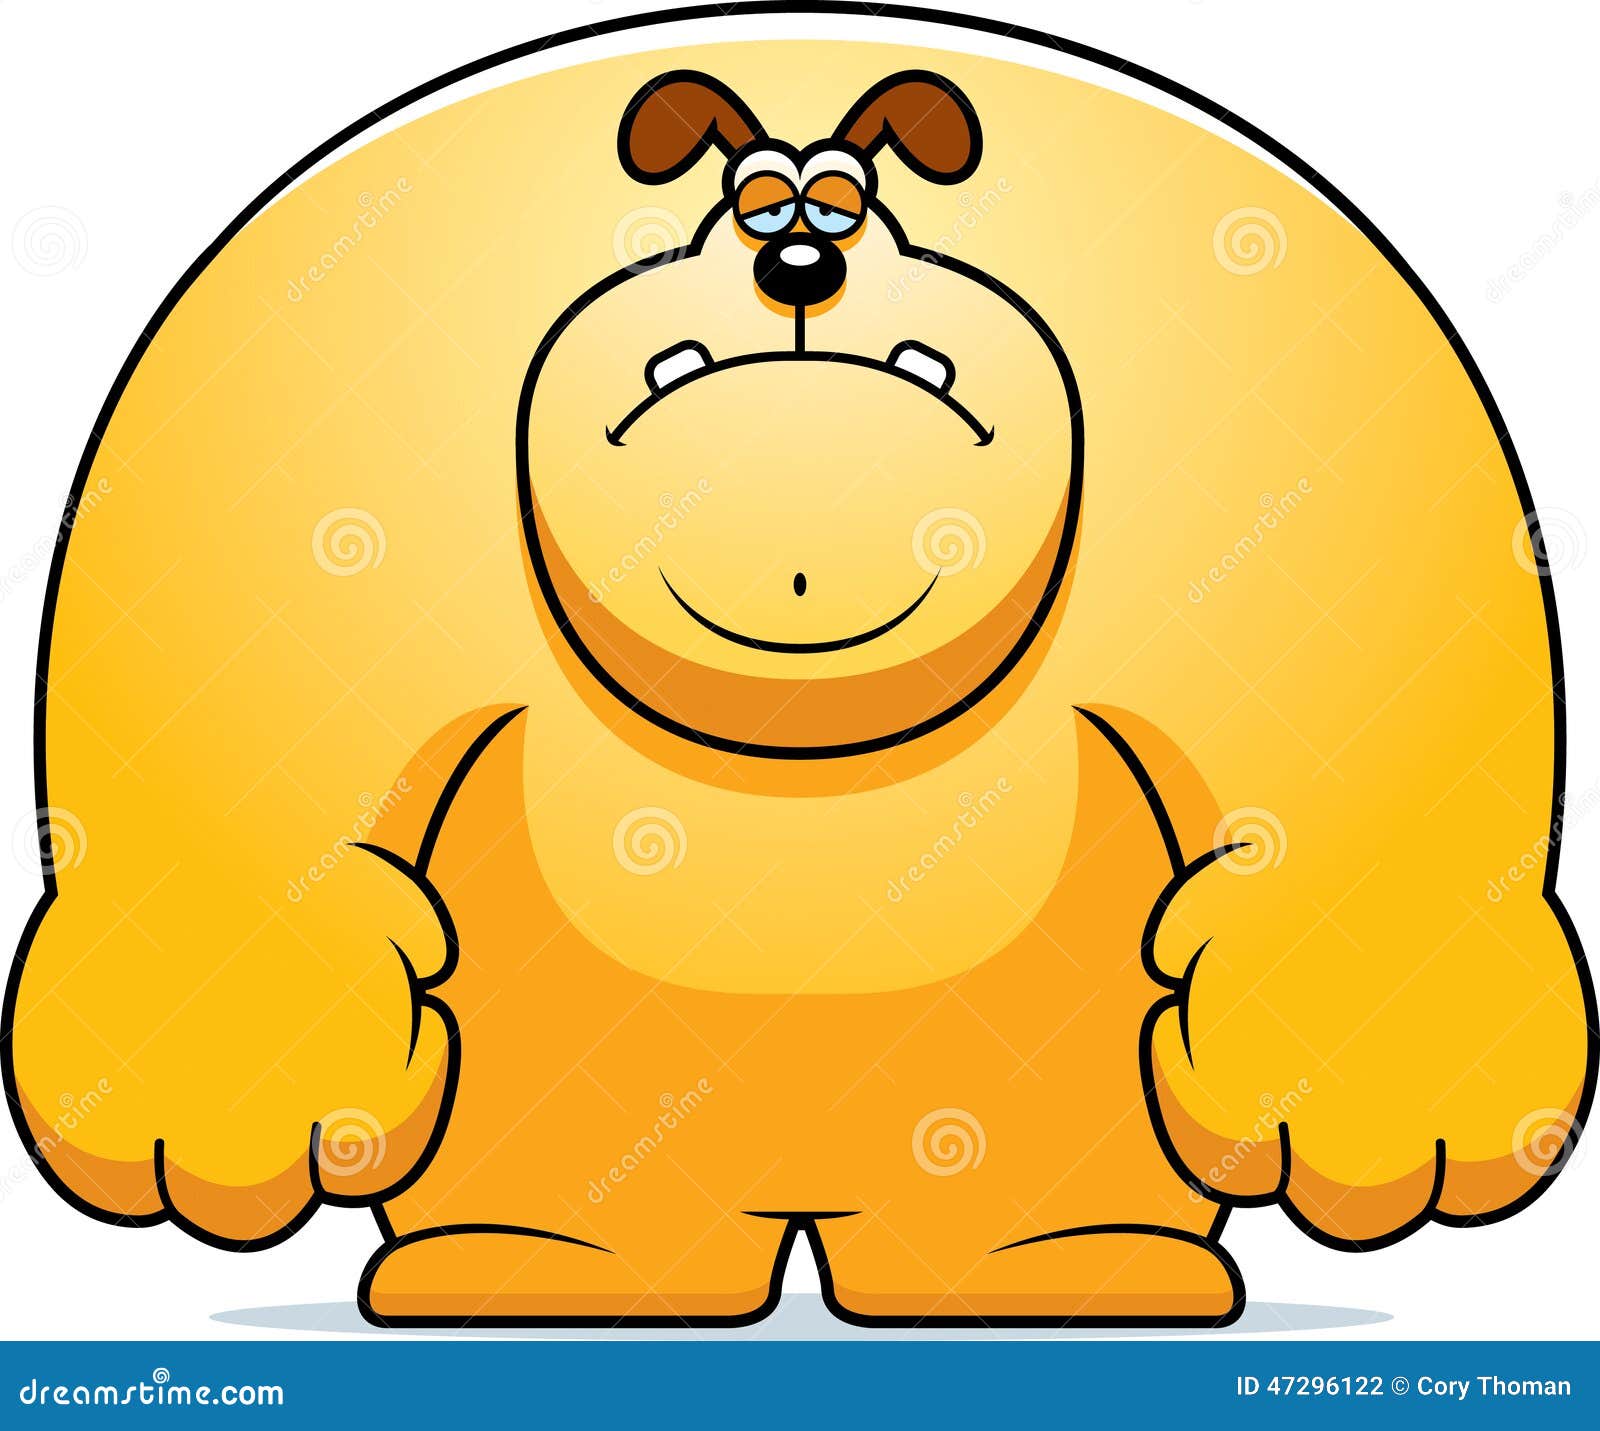 Sad Cartoon Dog stock vector. Illustration of cartoon - 47296122